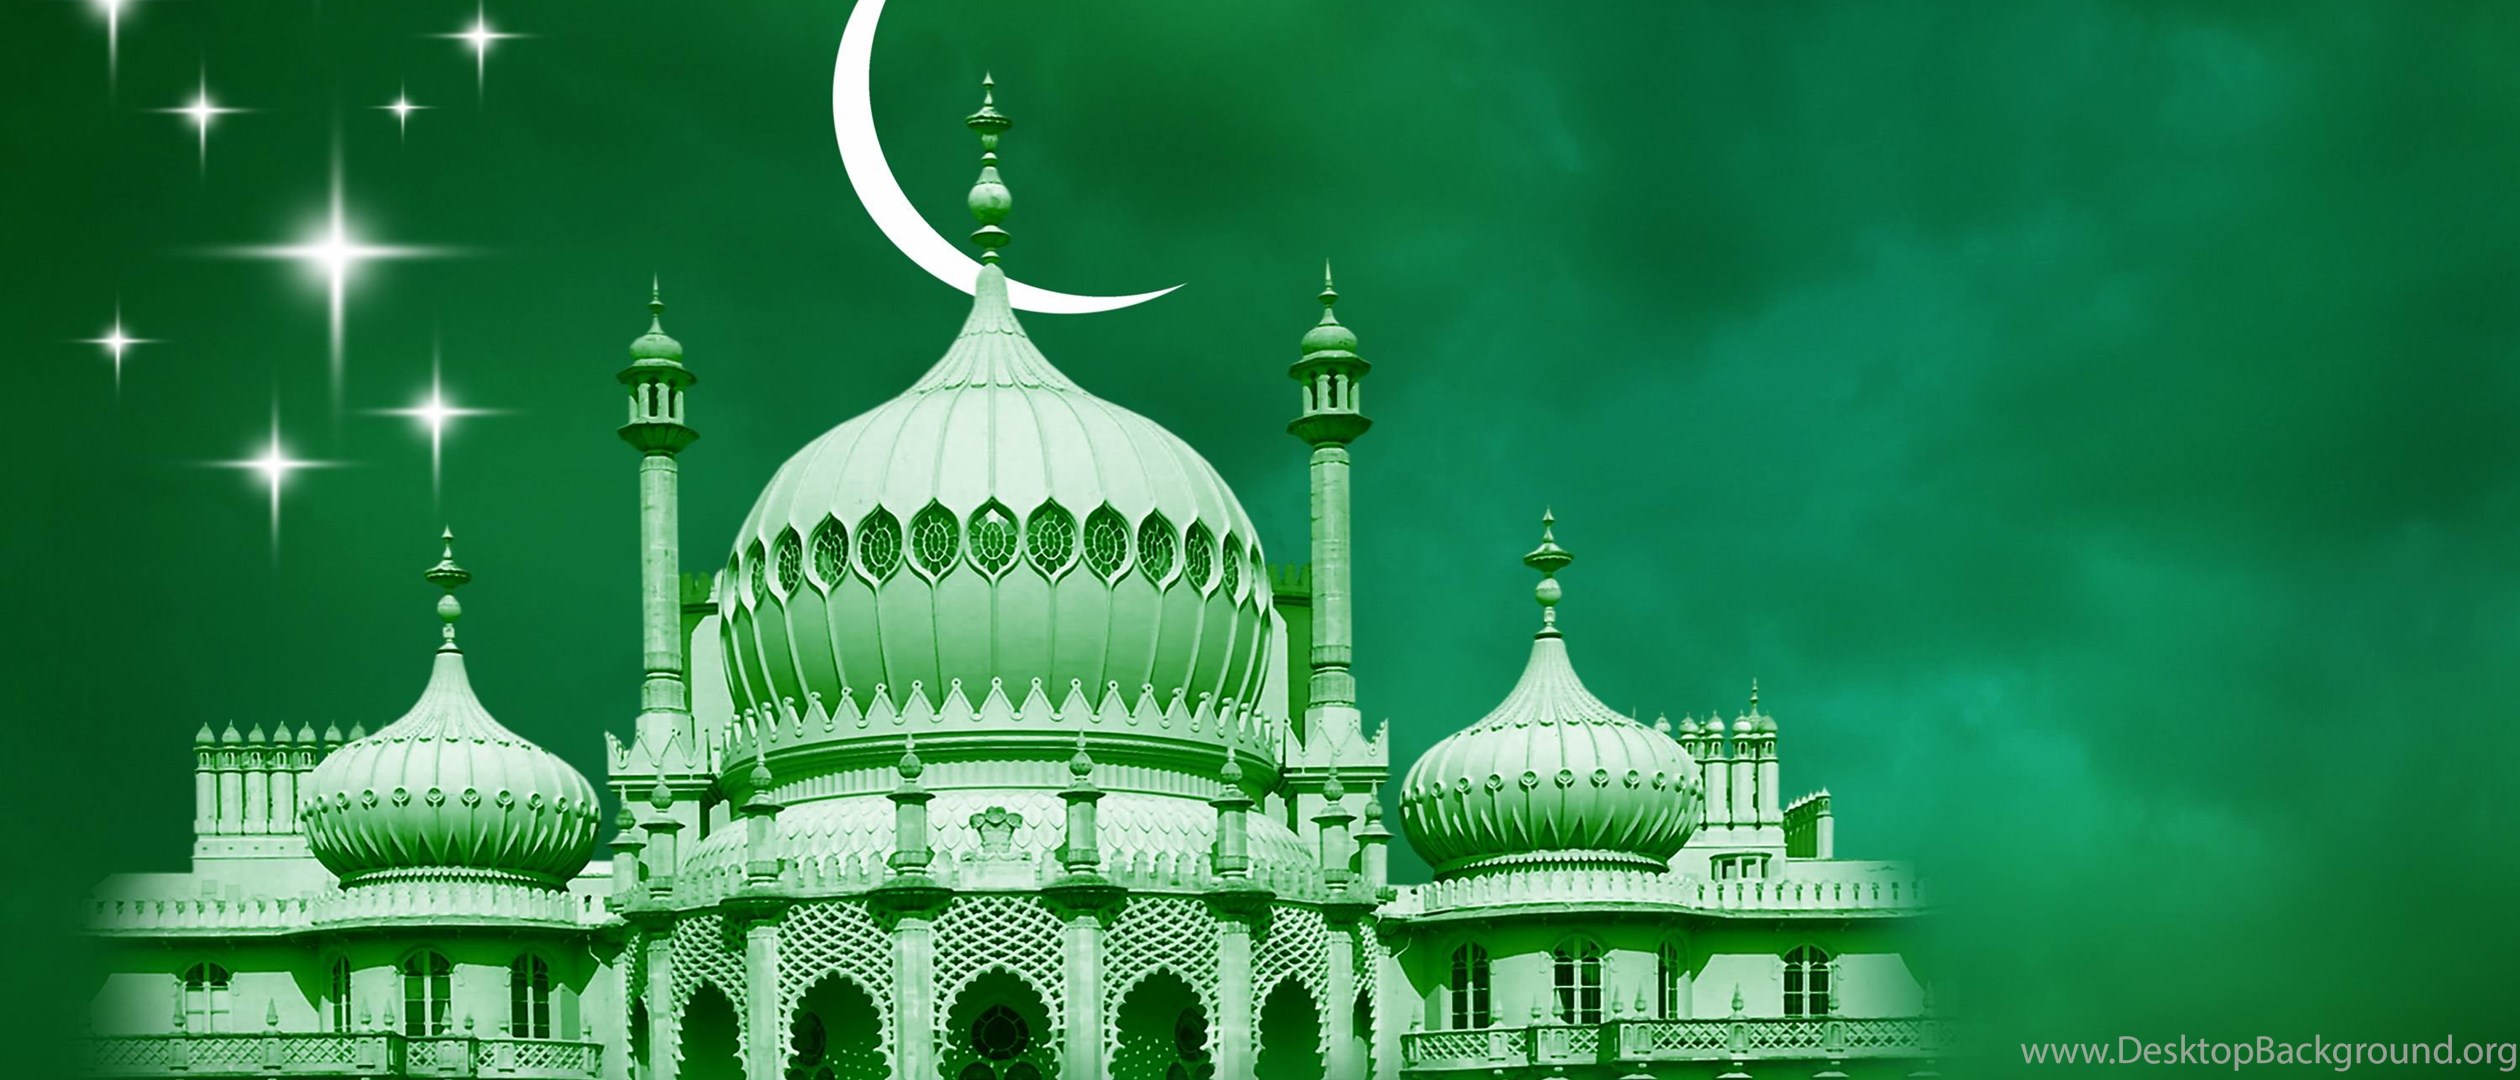 Картинки с мусульманским праздником. Мусульманский праздник Курбан байрам. Ураза и Курбан байрам. Мечеть на зеленом фоне. С праздником Курбан байрам.